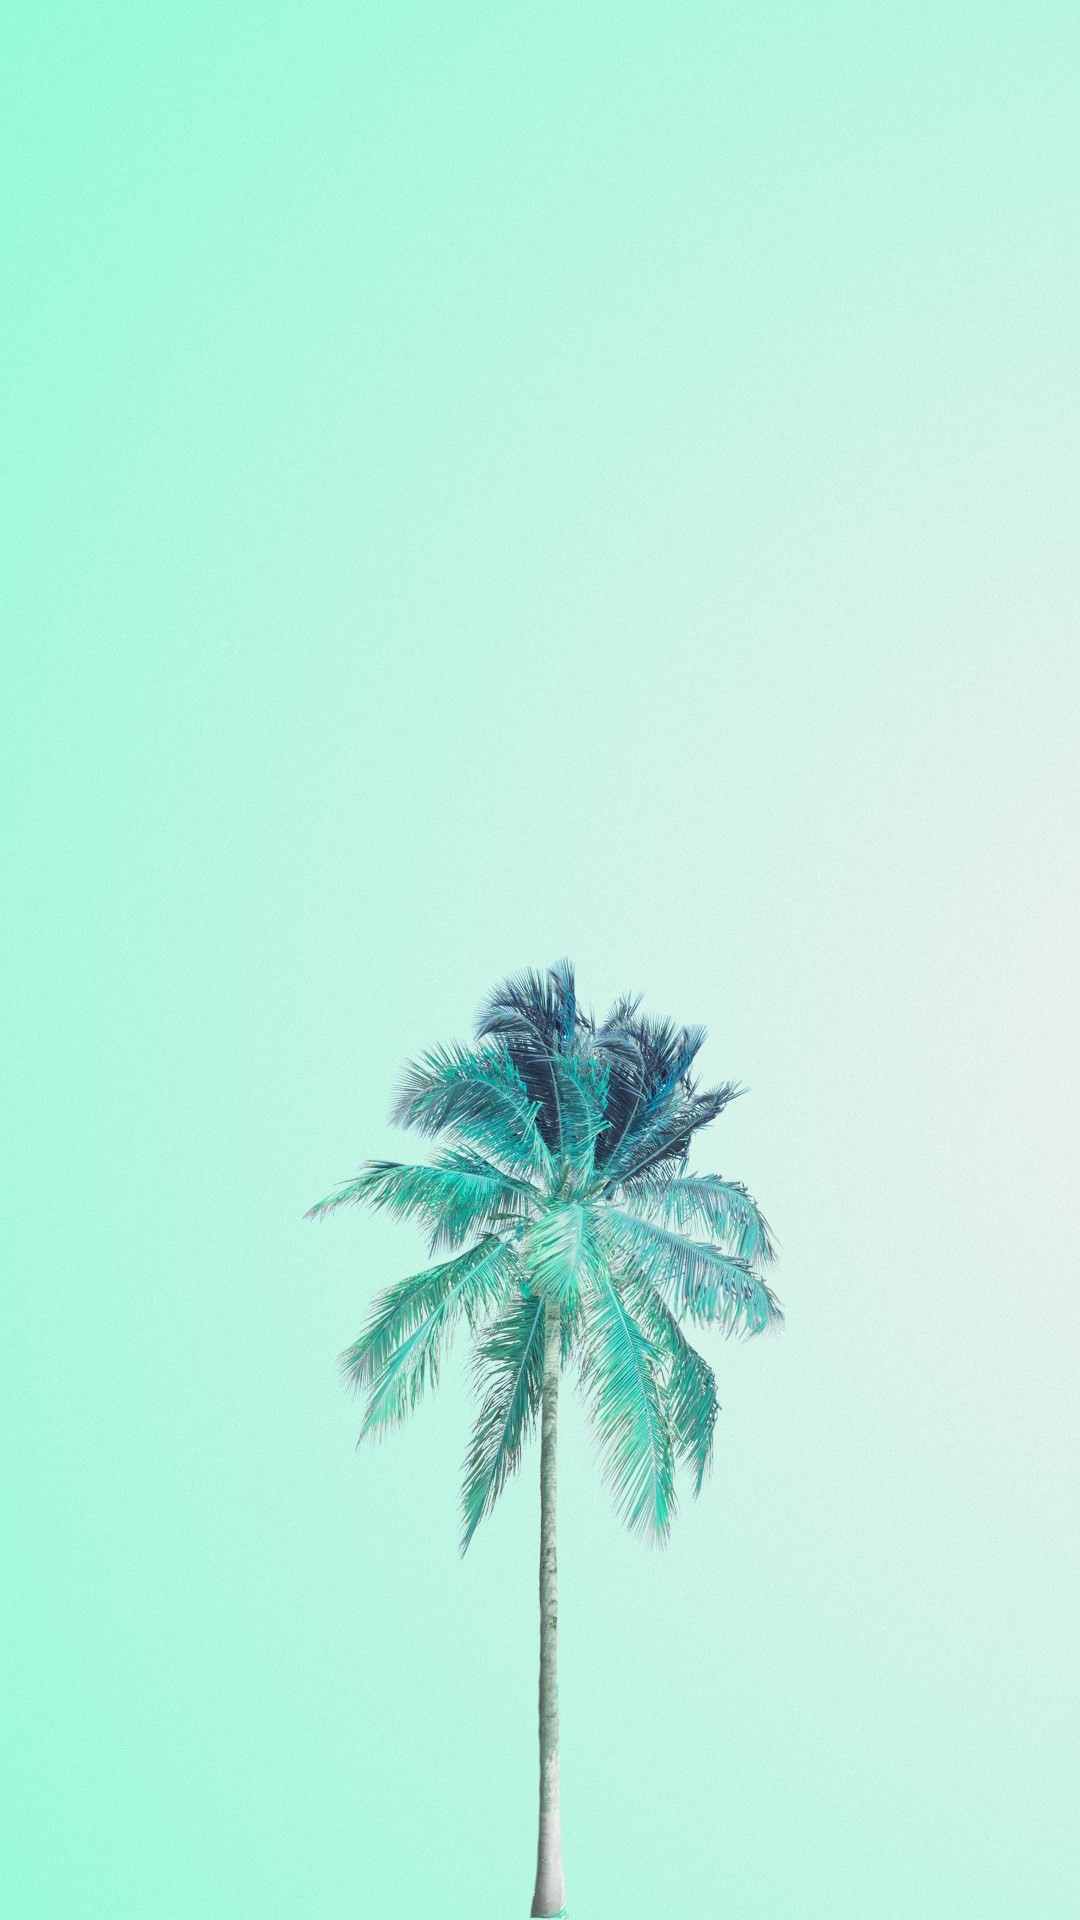 startbildschirm wallpaper tumblr,baum,blau,blatt,grün,himmel